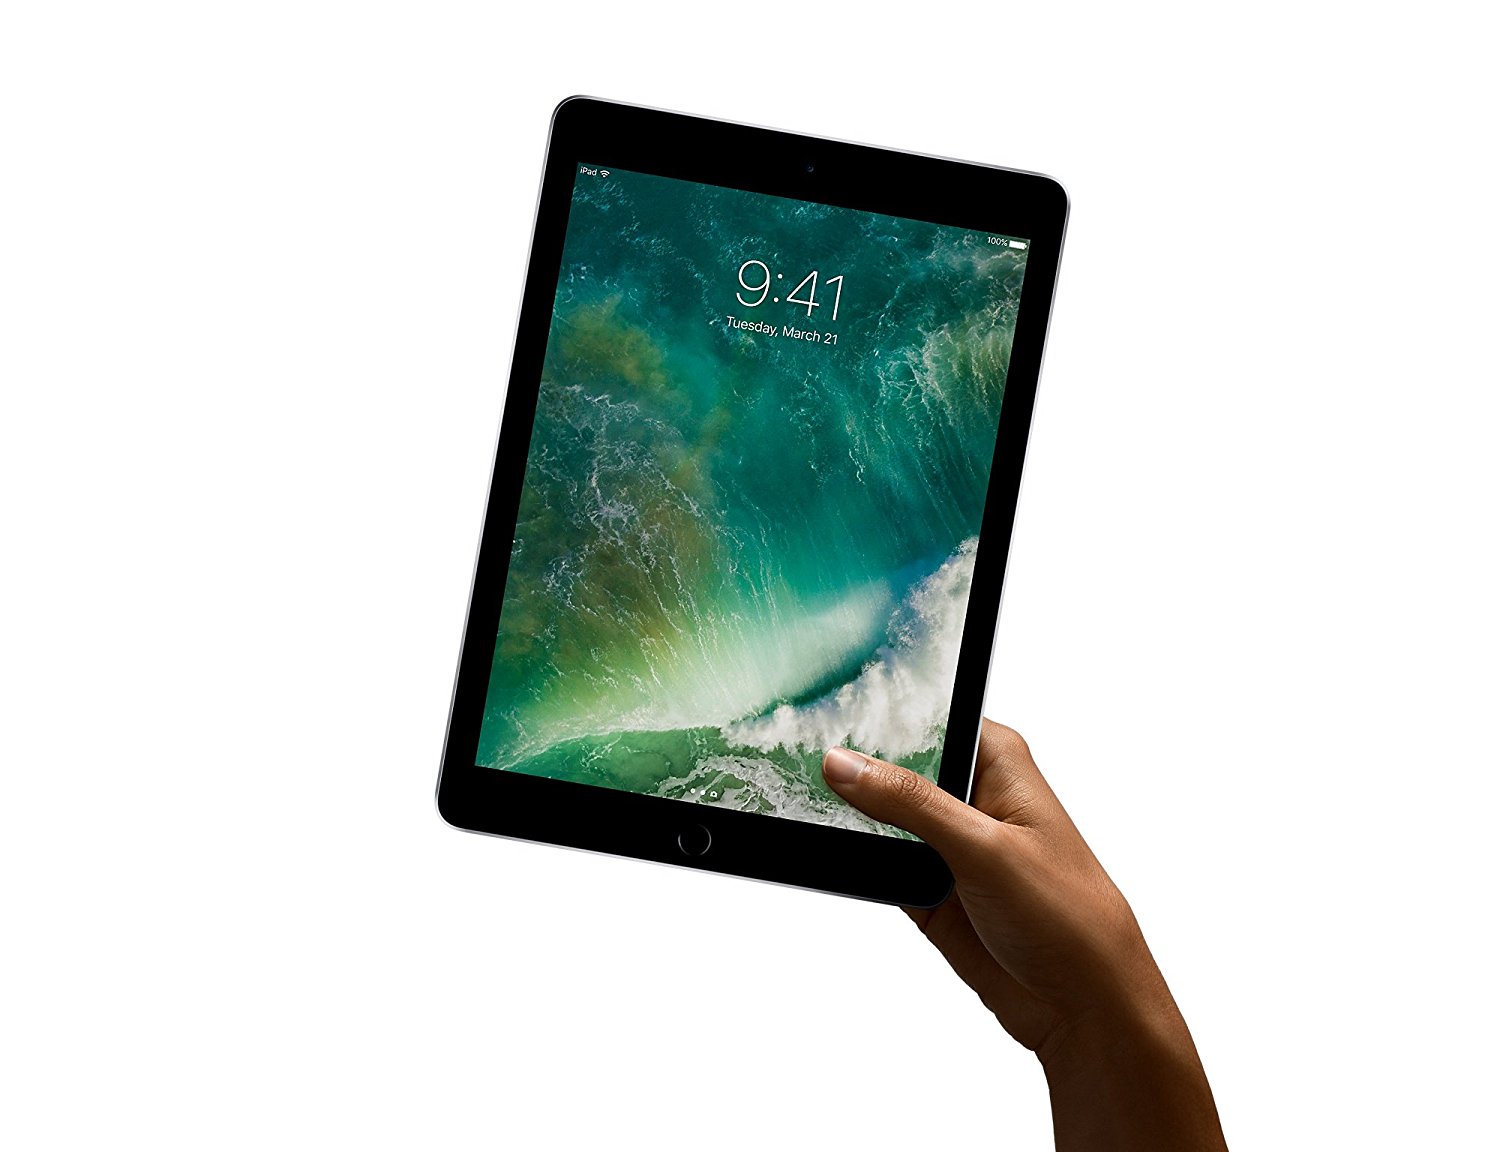 Apple iPad 2017 Review